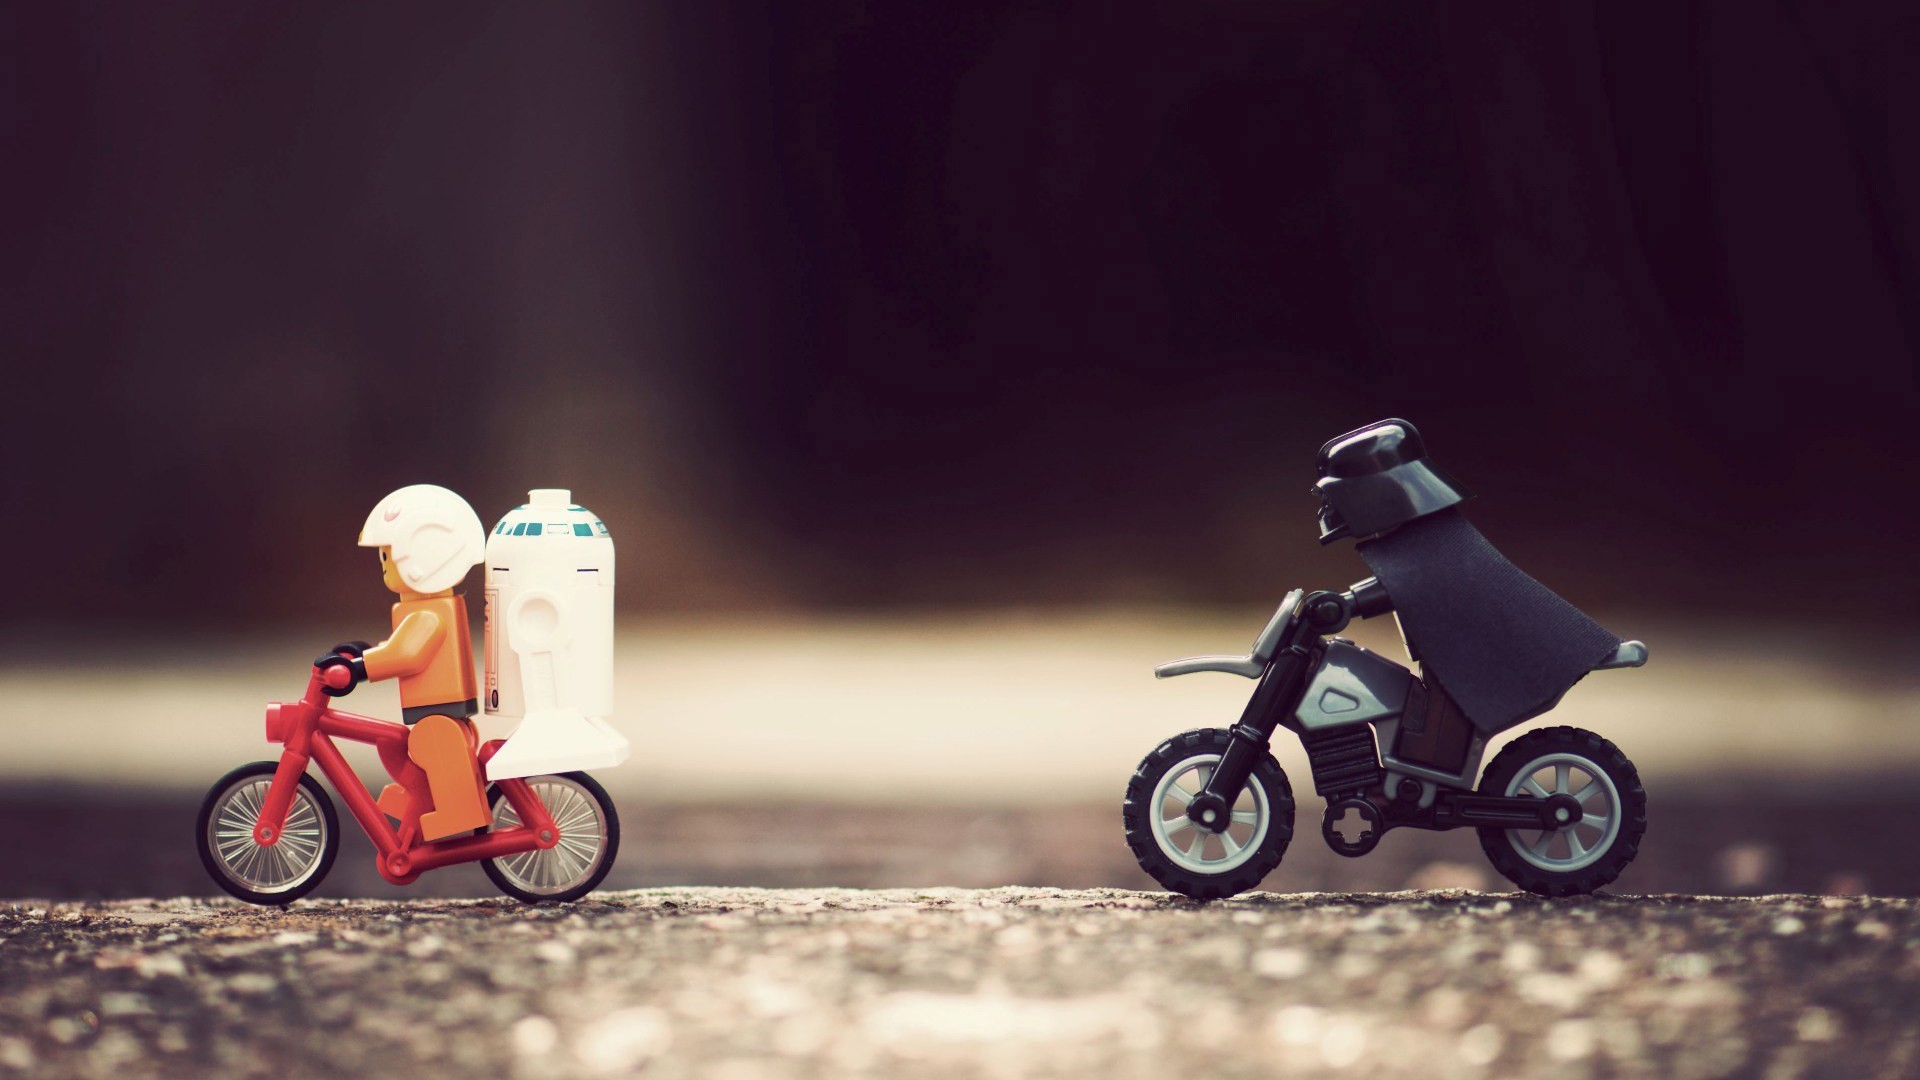 Star Wars LEGO Darth Vader Mix Up Toys Obi Wan Kenobi 1920x1080